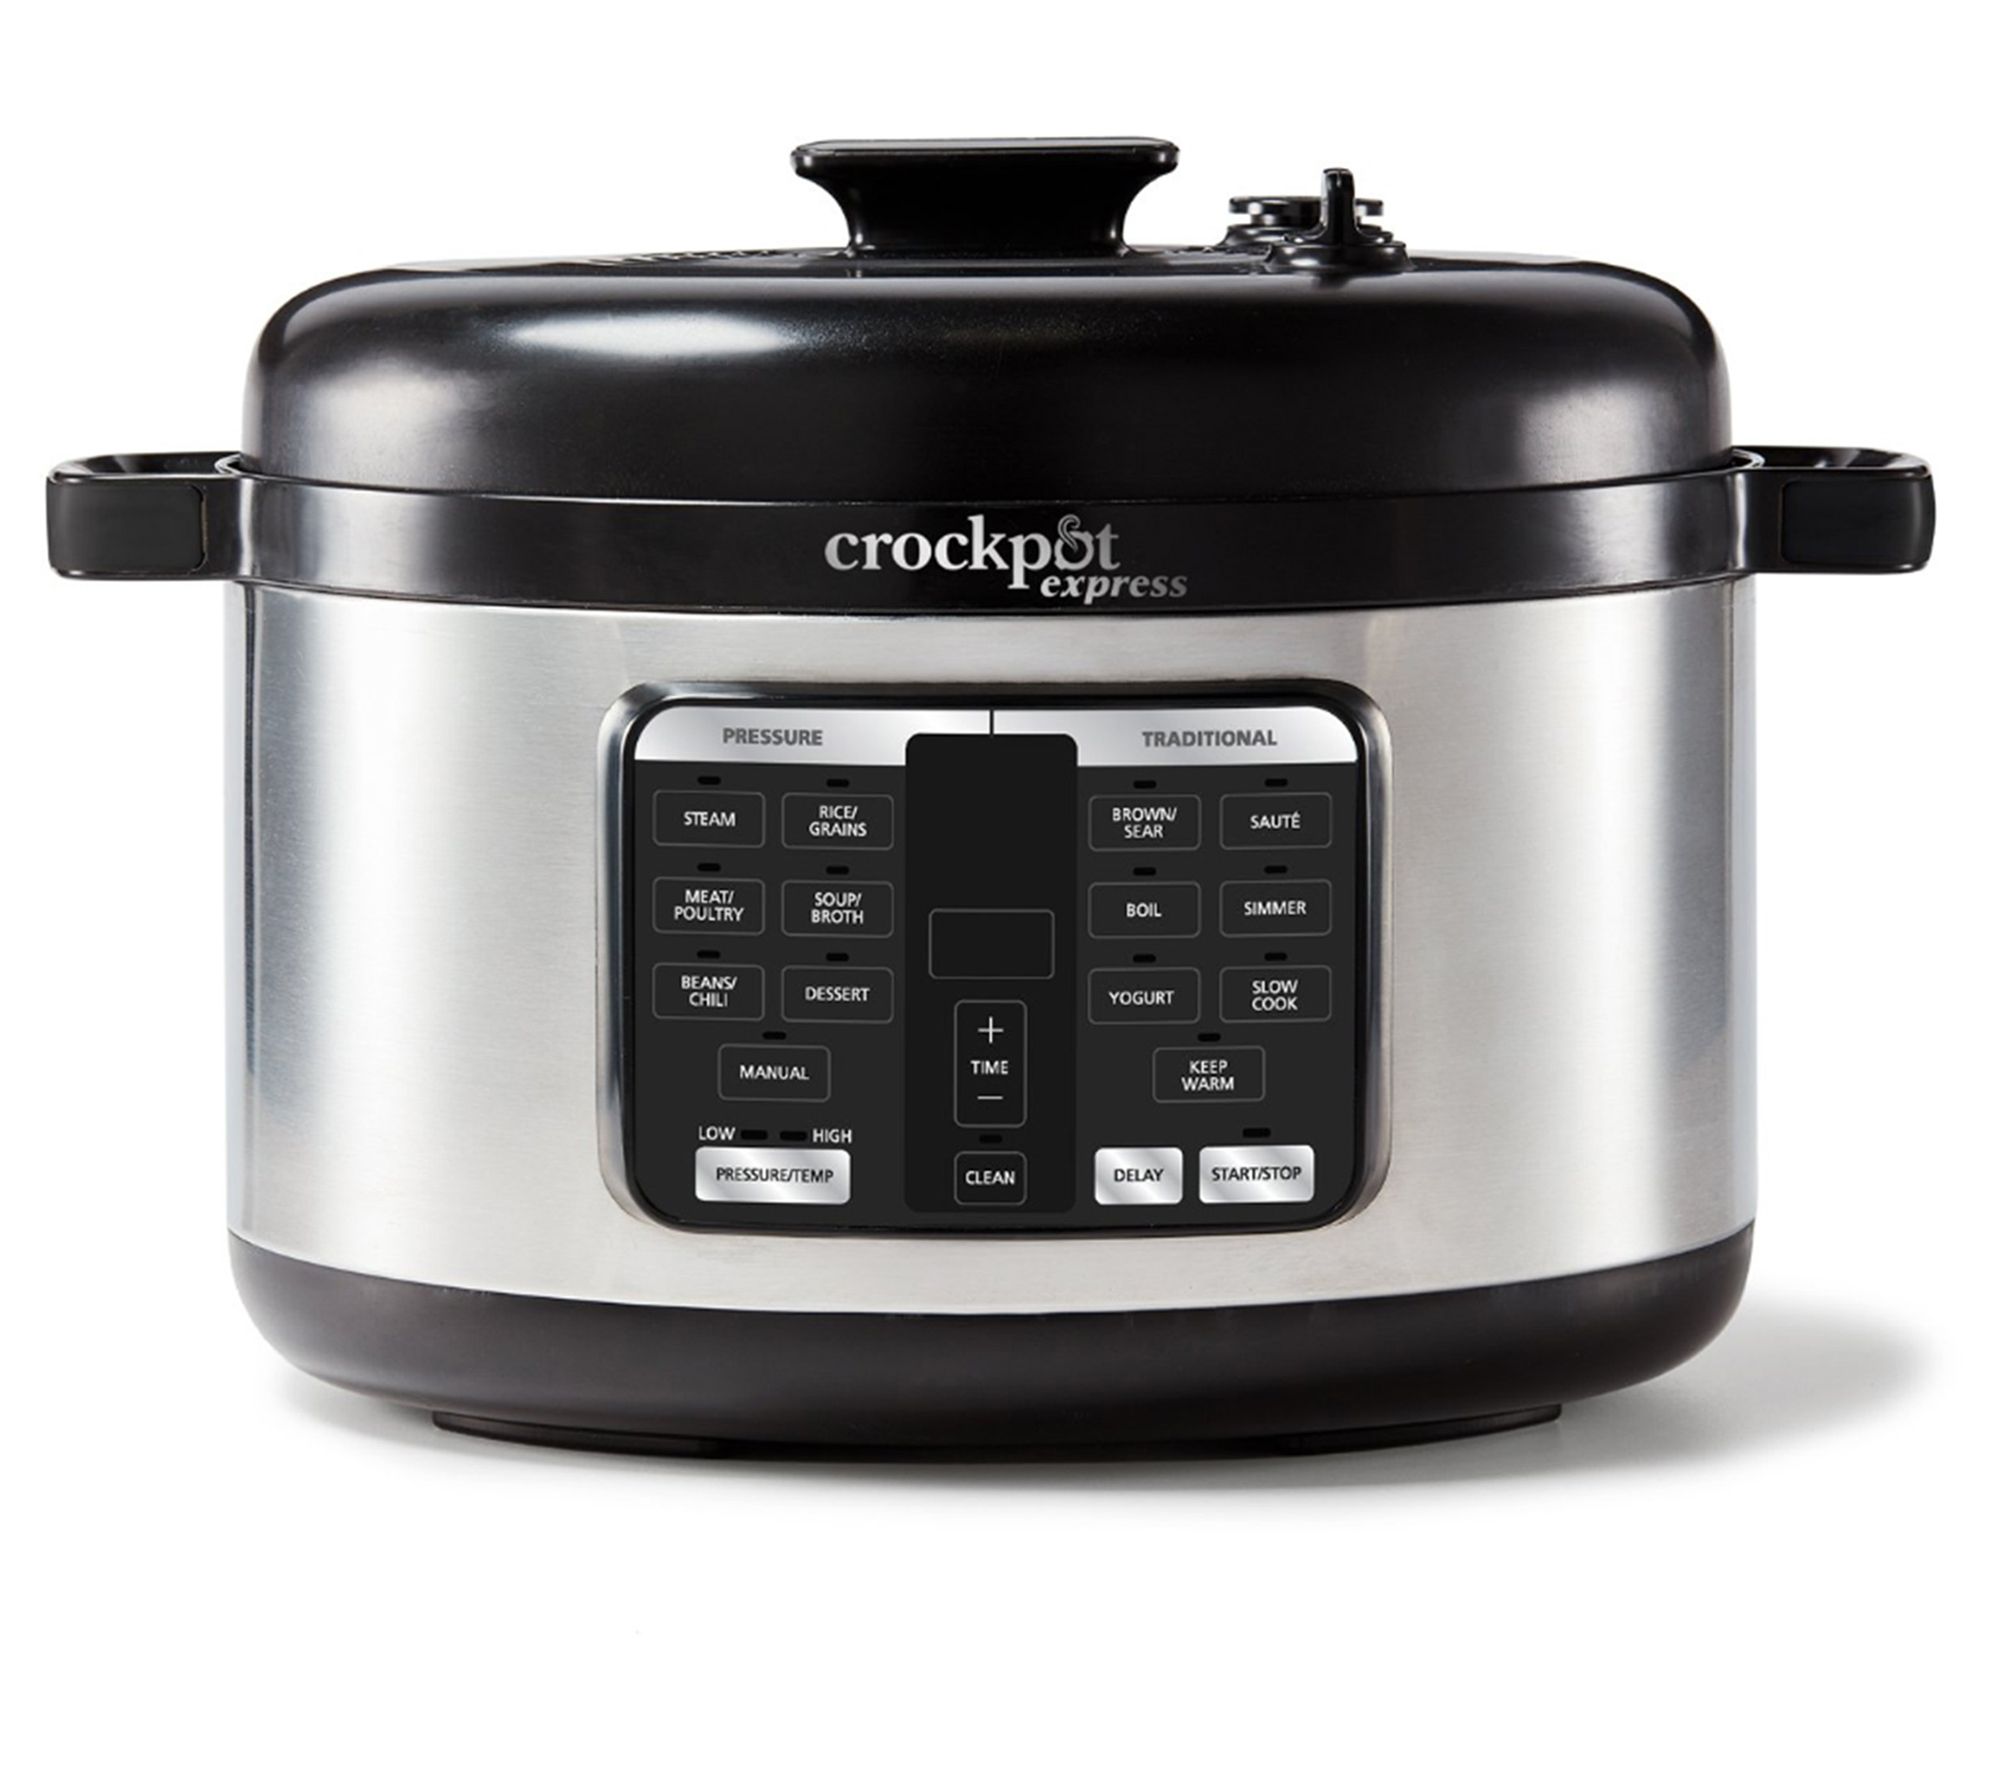 Crock-pot Rectangular Crock Pot Brand Ribbed Casserole Crock-pot